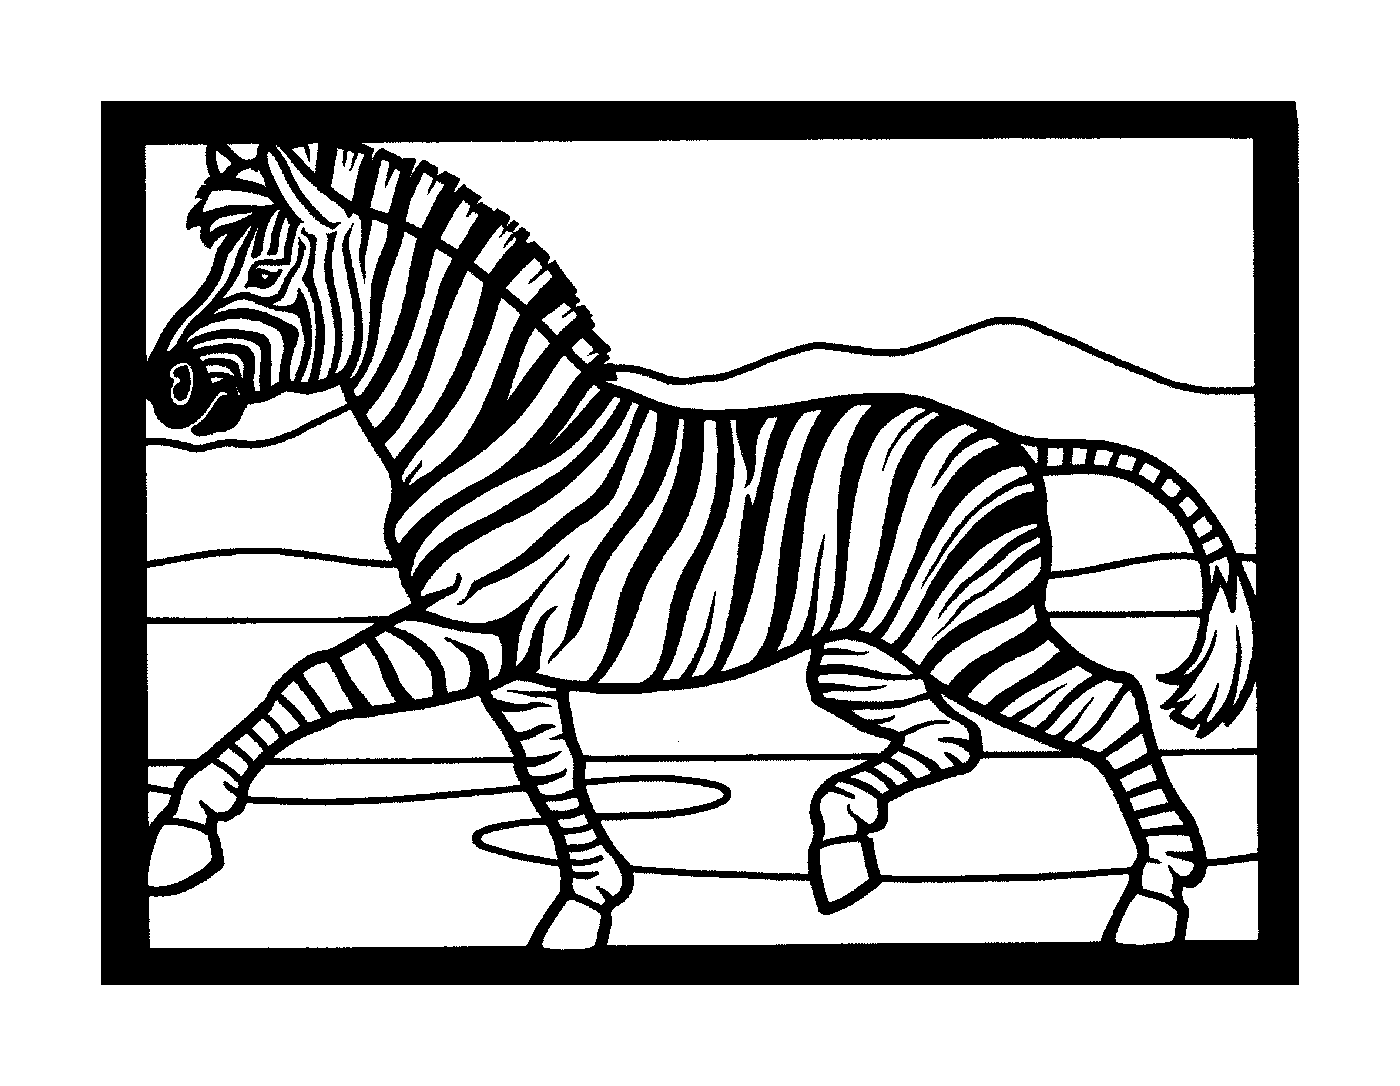  Zebra veloce nel bel mezzo della gara 